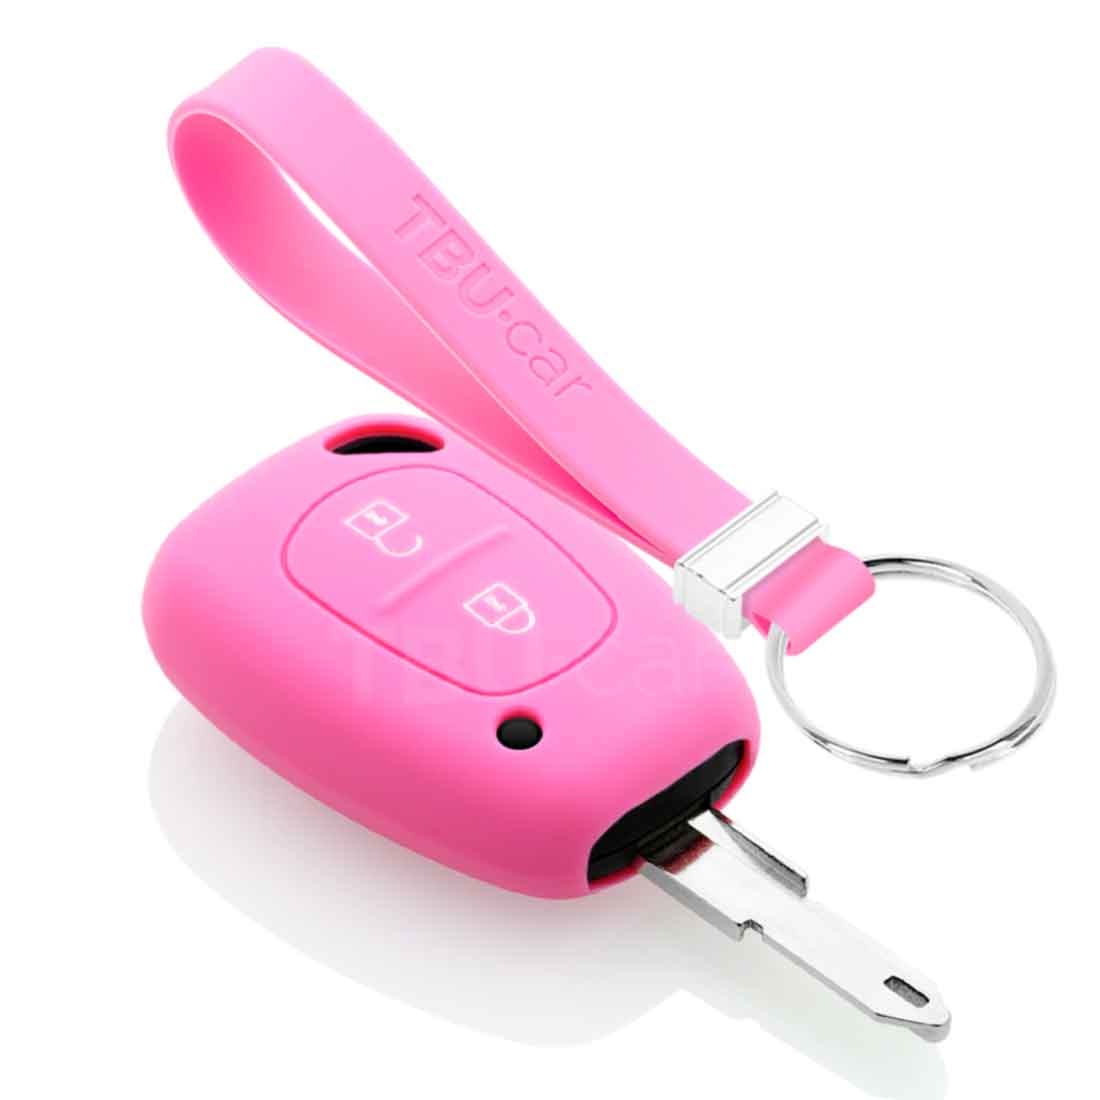 TBU car TBU car Autoschlüssel Hülle kompatibel mit Nissan 2 Tasten - Schutzhülle aus Silikon - Auto Schlüsselhülle Cover in Rosa